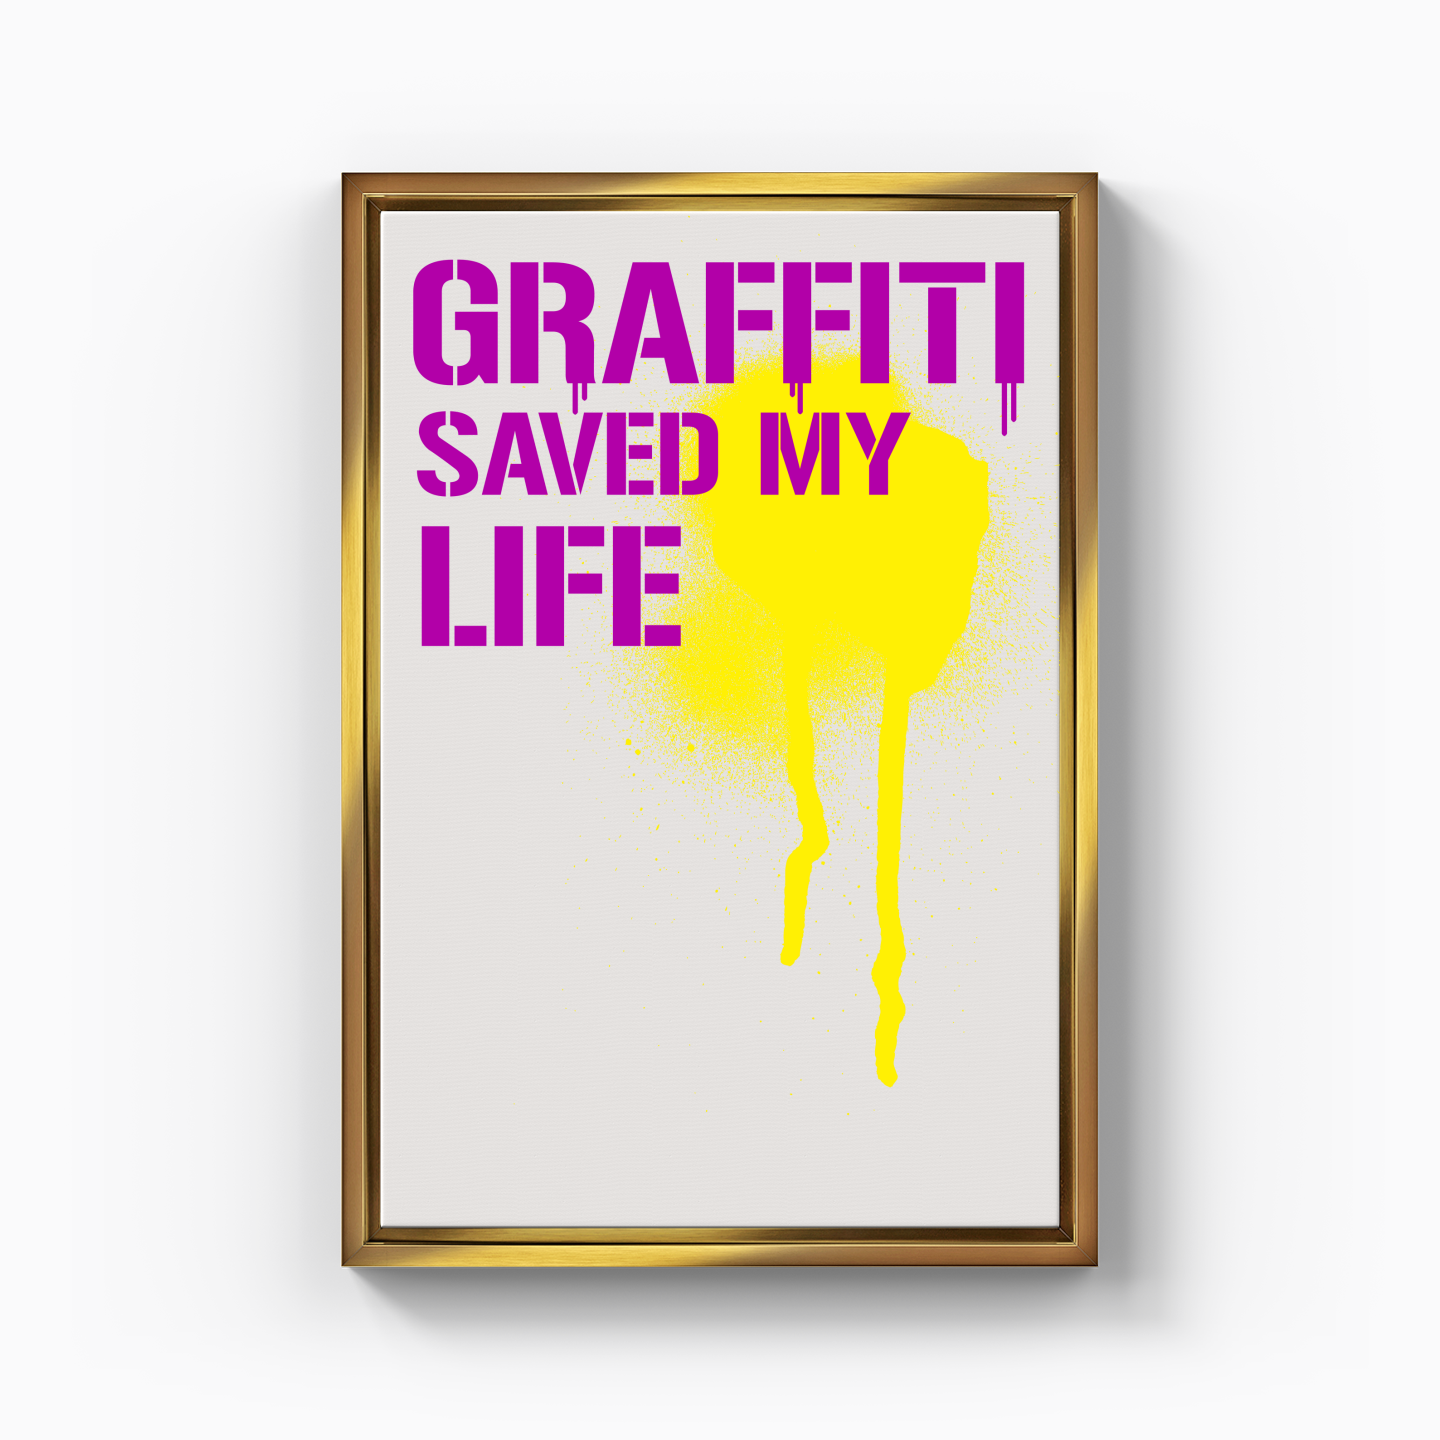 Graffiti saved my life - Kanvas Tablo